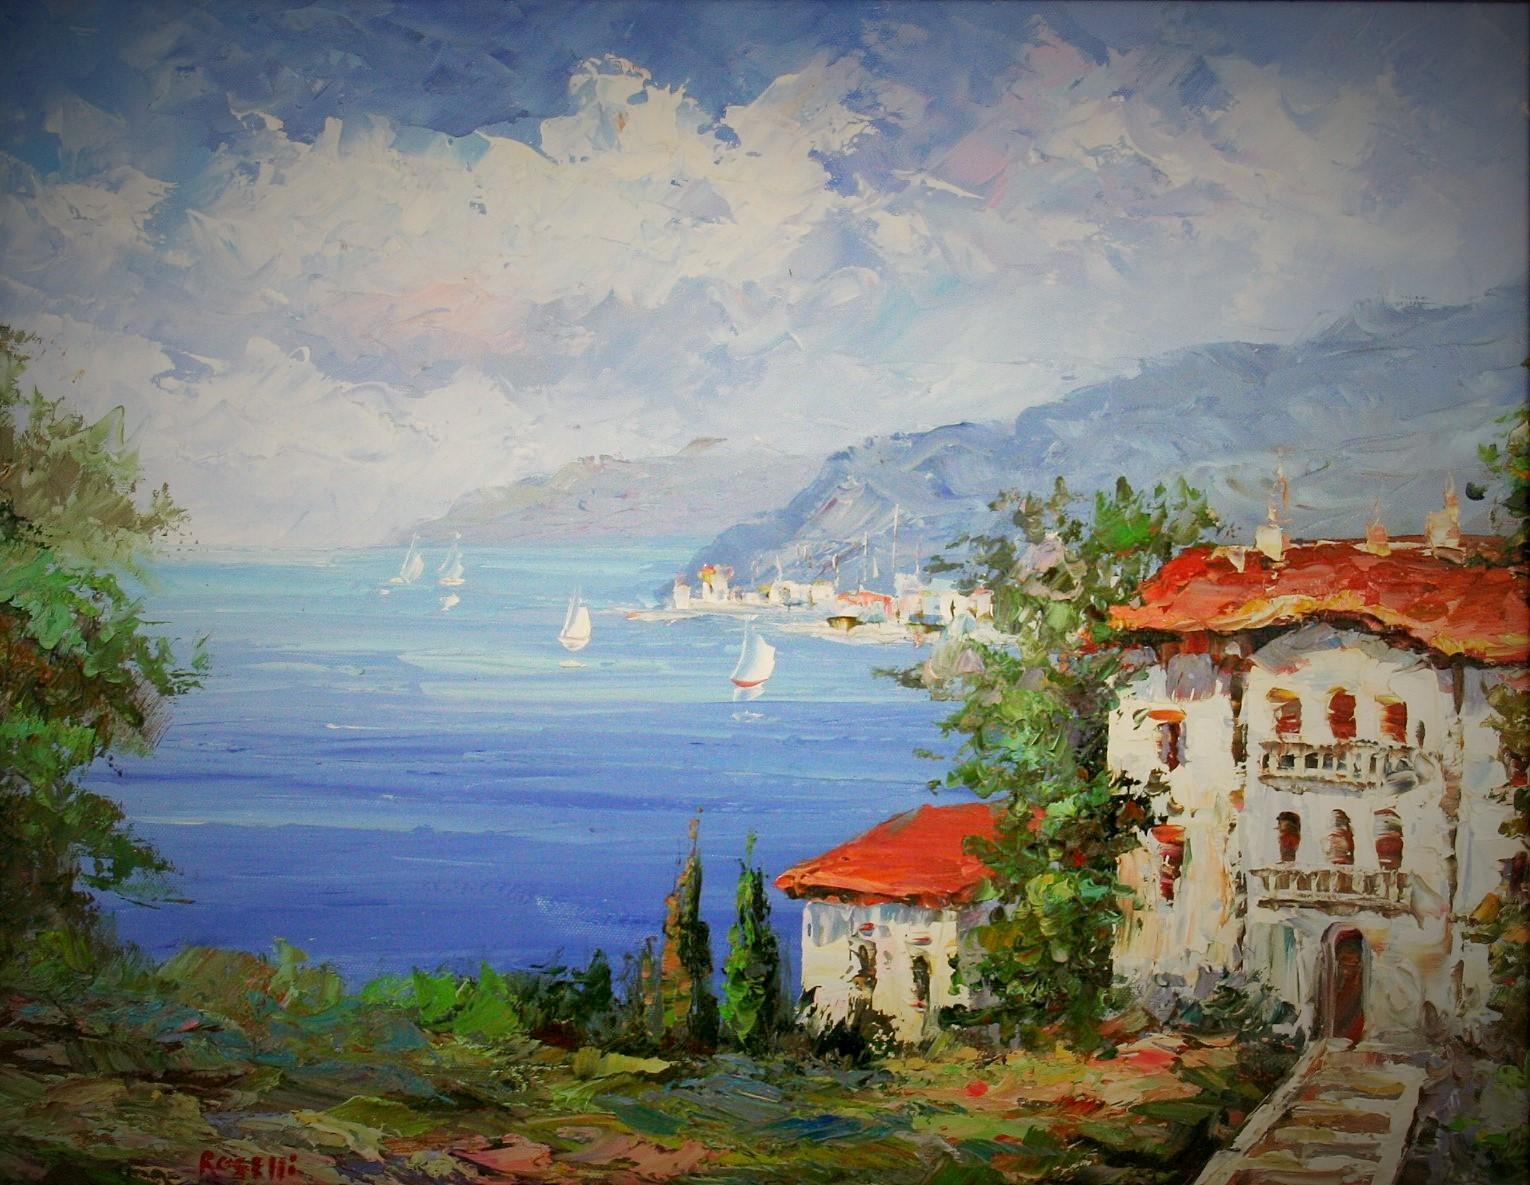 Roselli Landscape Painting - Modern Impressionist Seascape Oil Painting Sailing on the Amalfi Coast of Italy